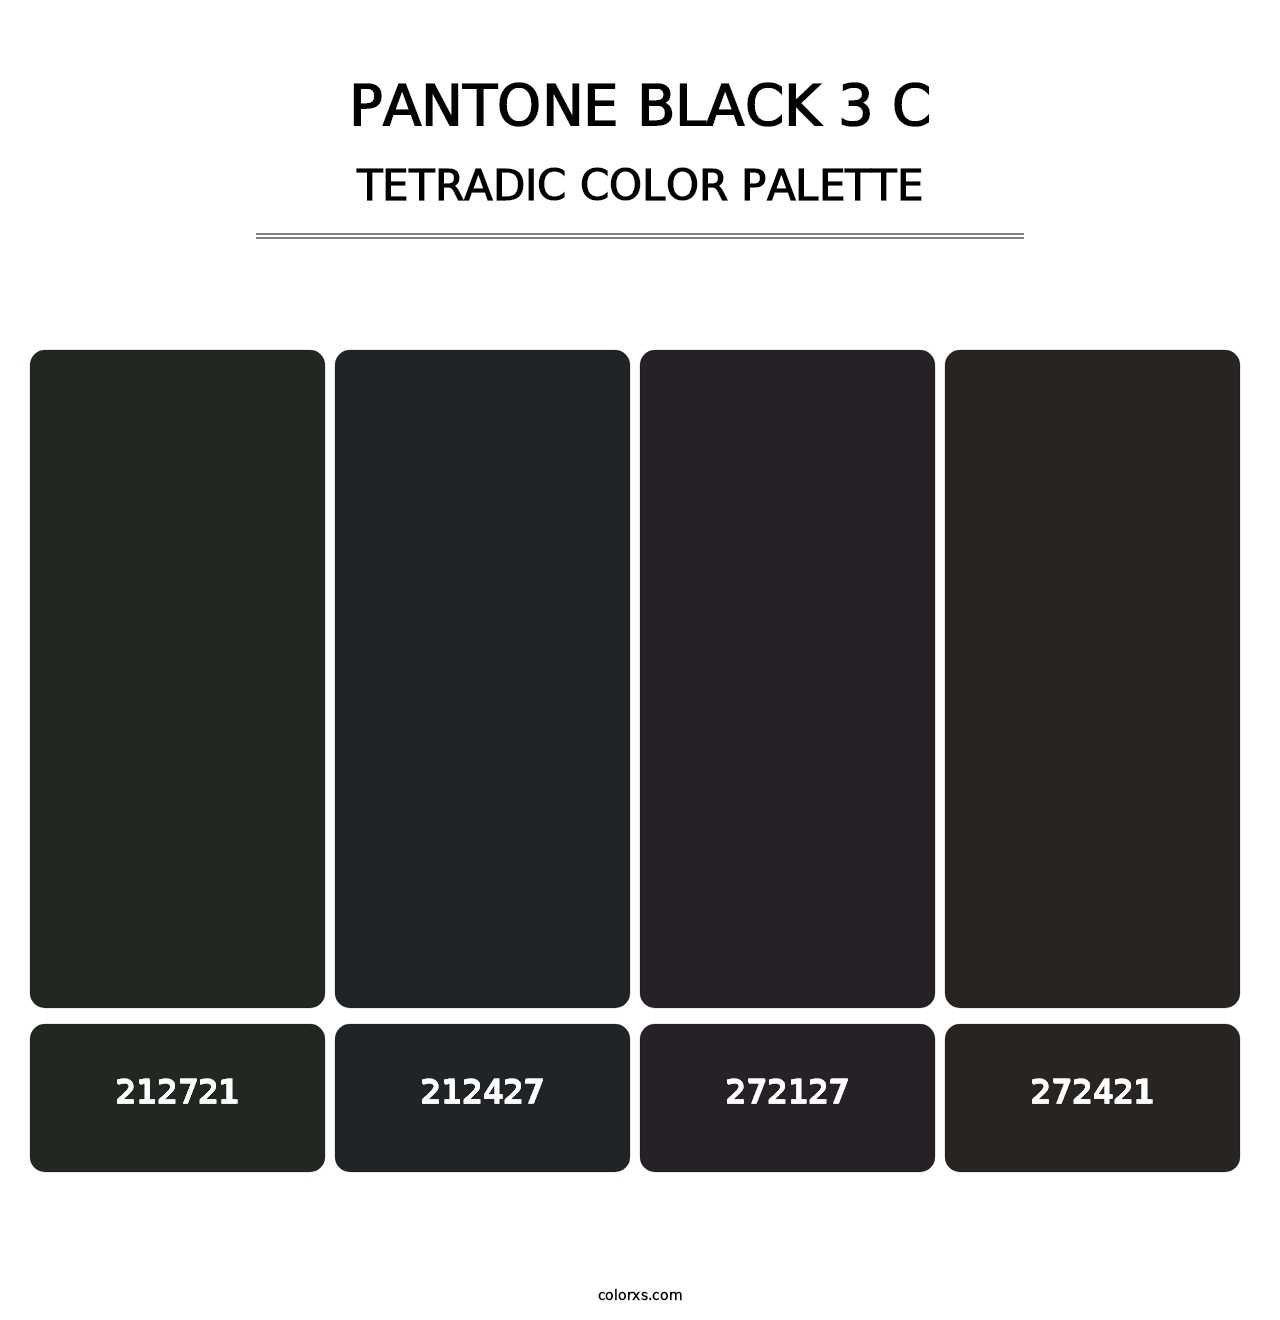 PANTONE Black 3 C - Tetradic Color Palette